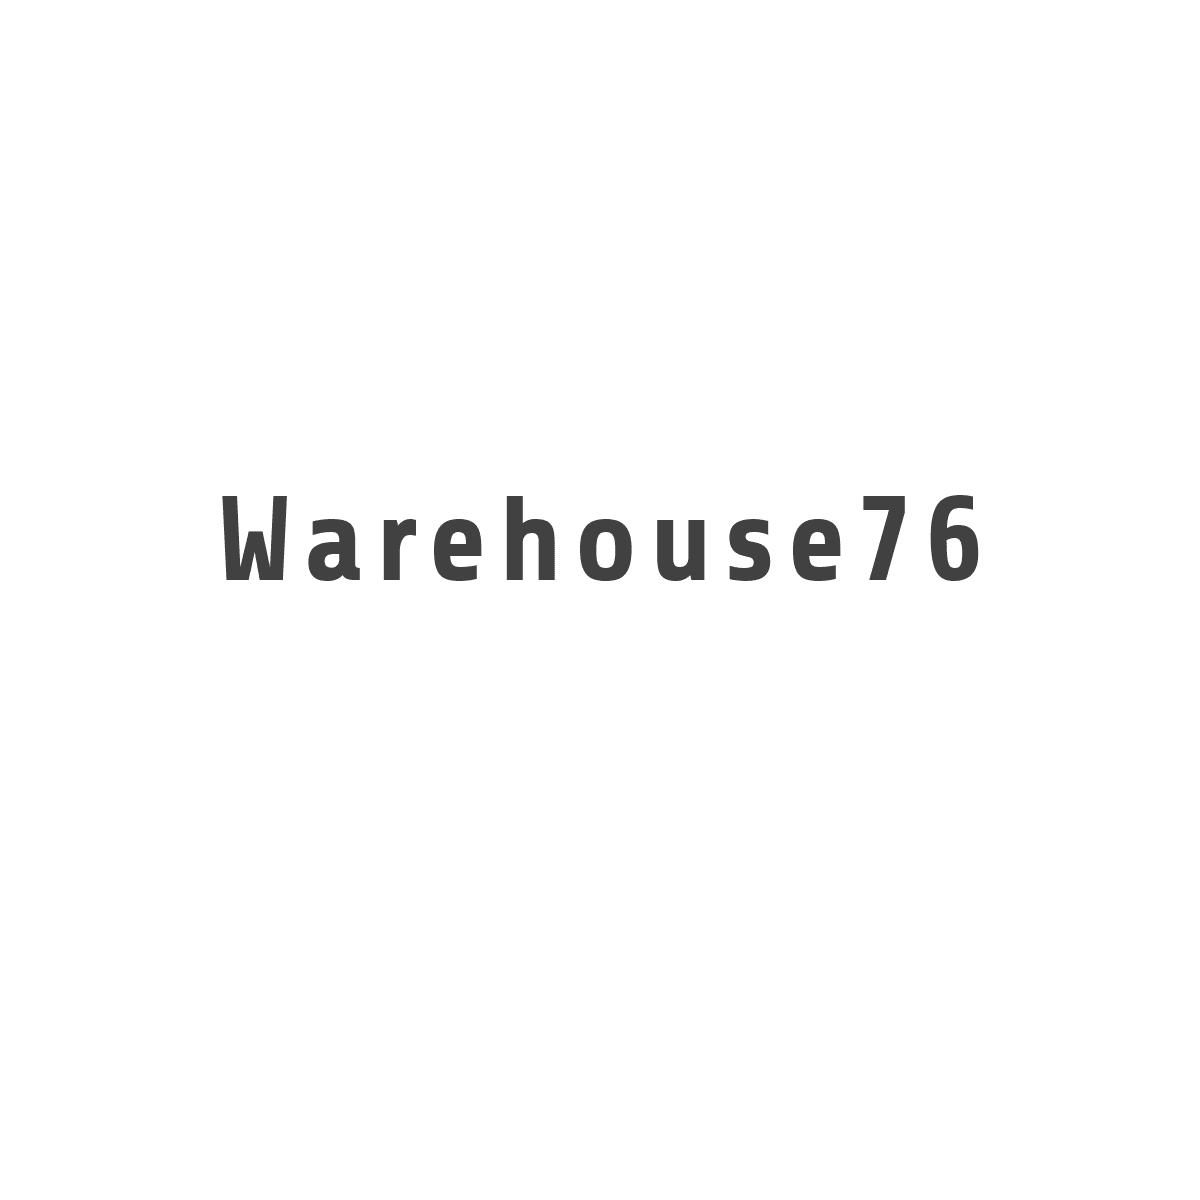 Warehouse76